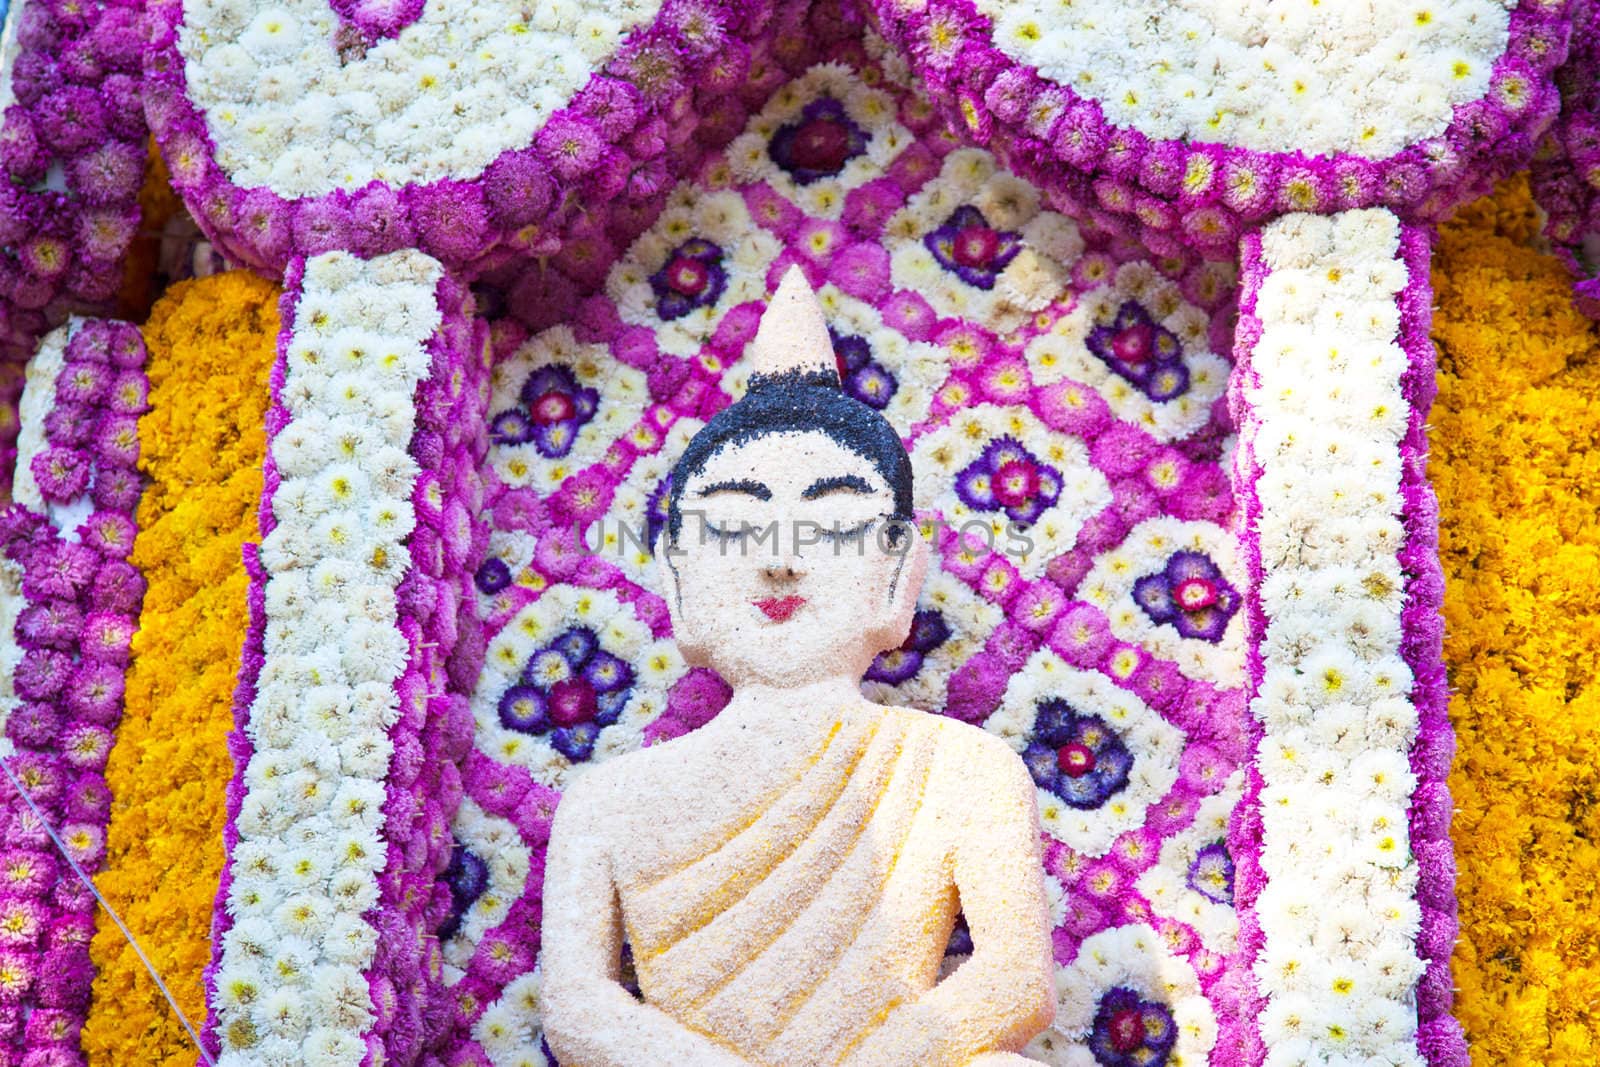 Buddha made of flowers by Farina6000